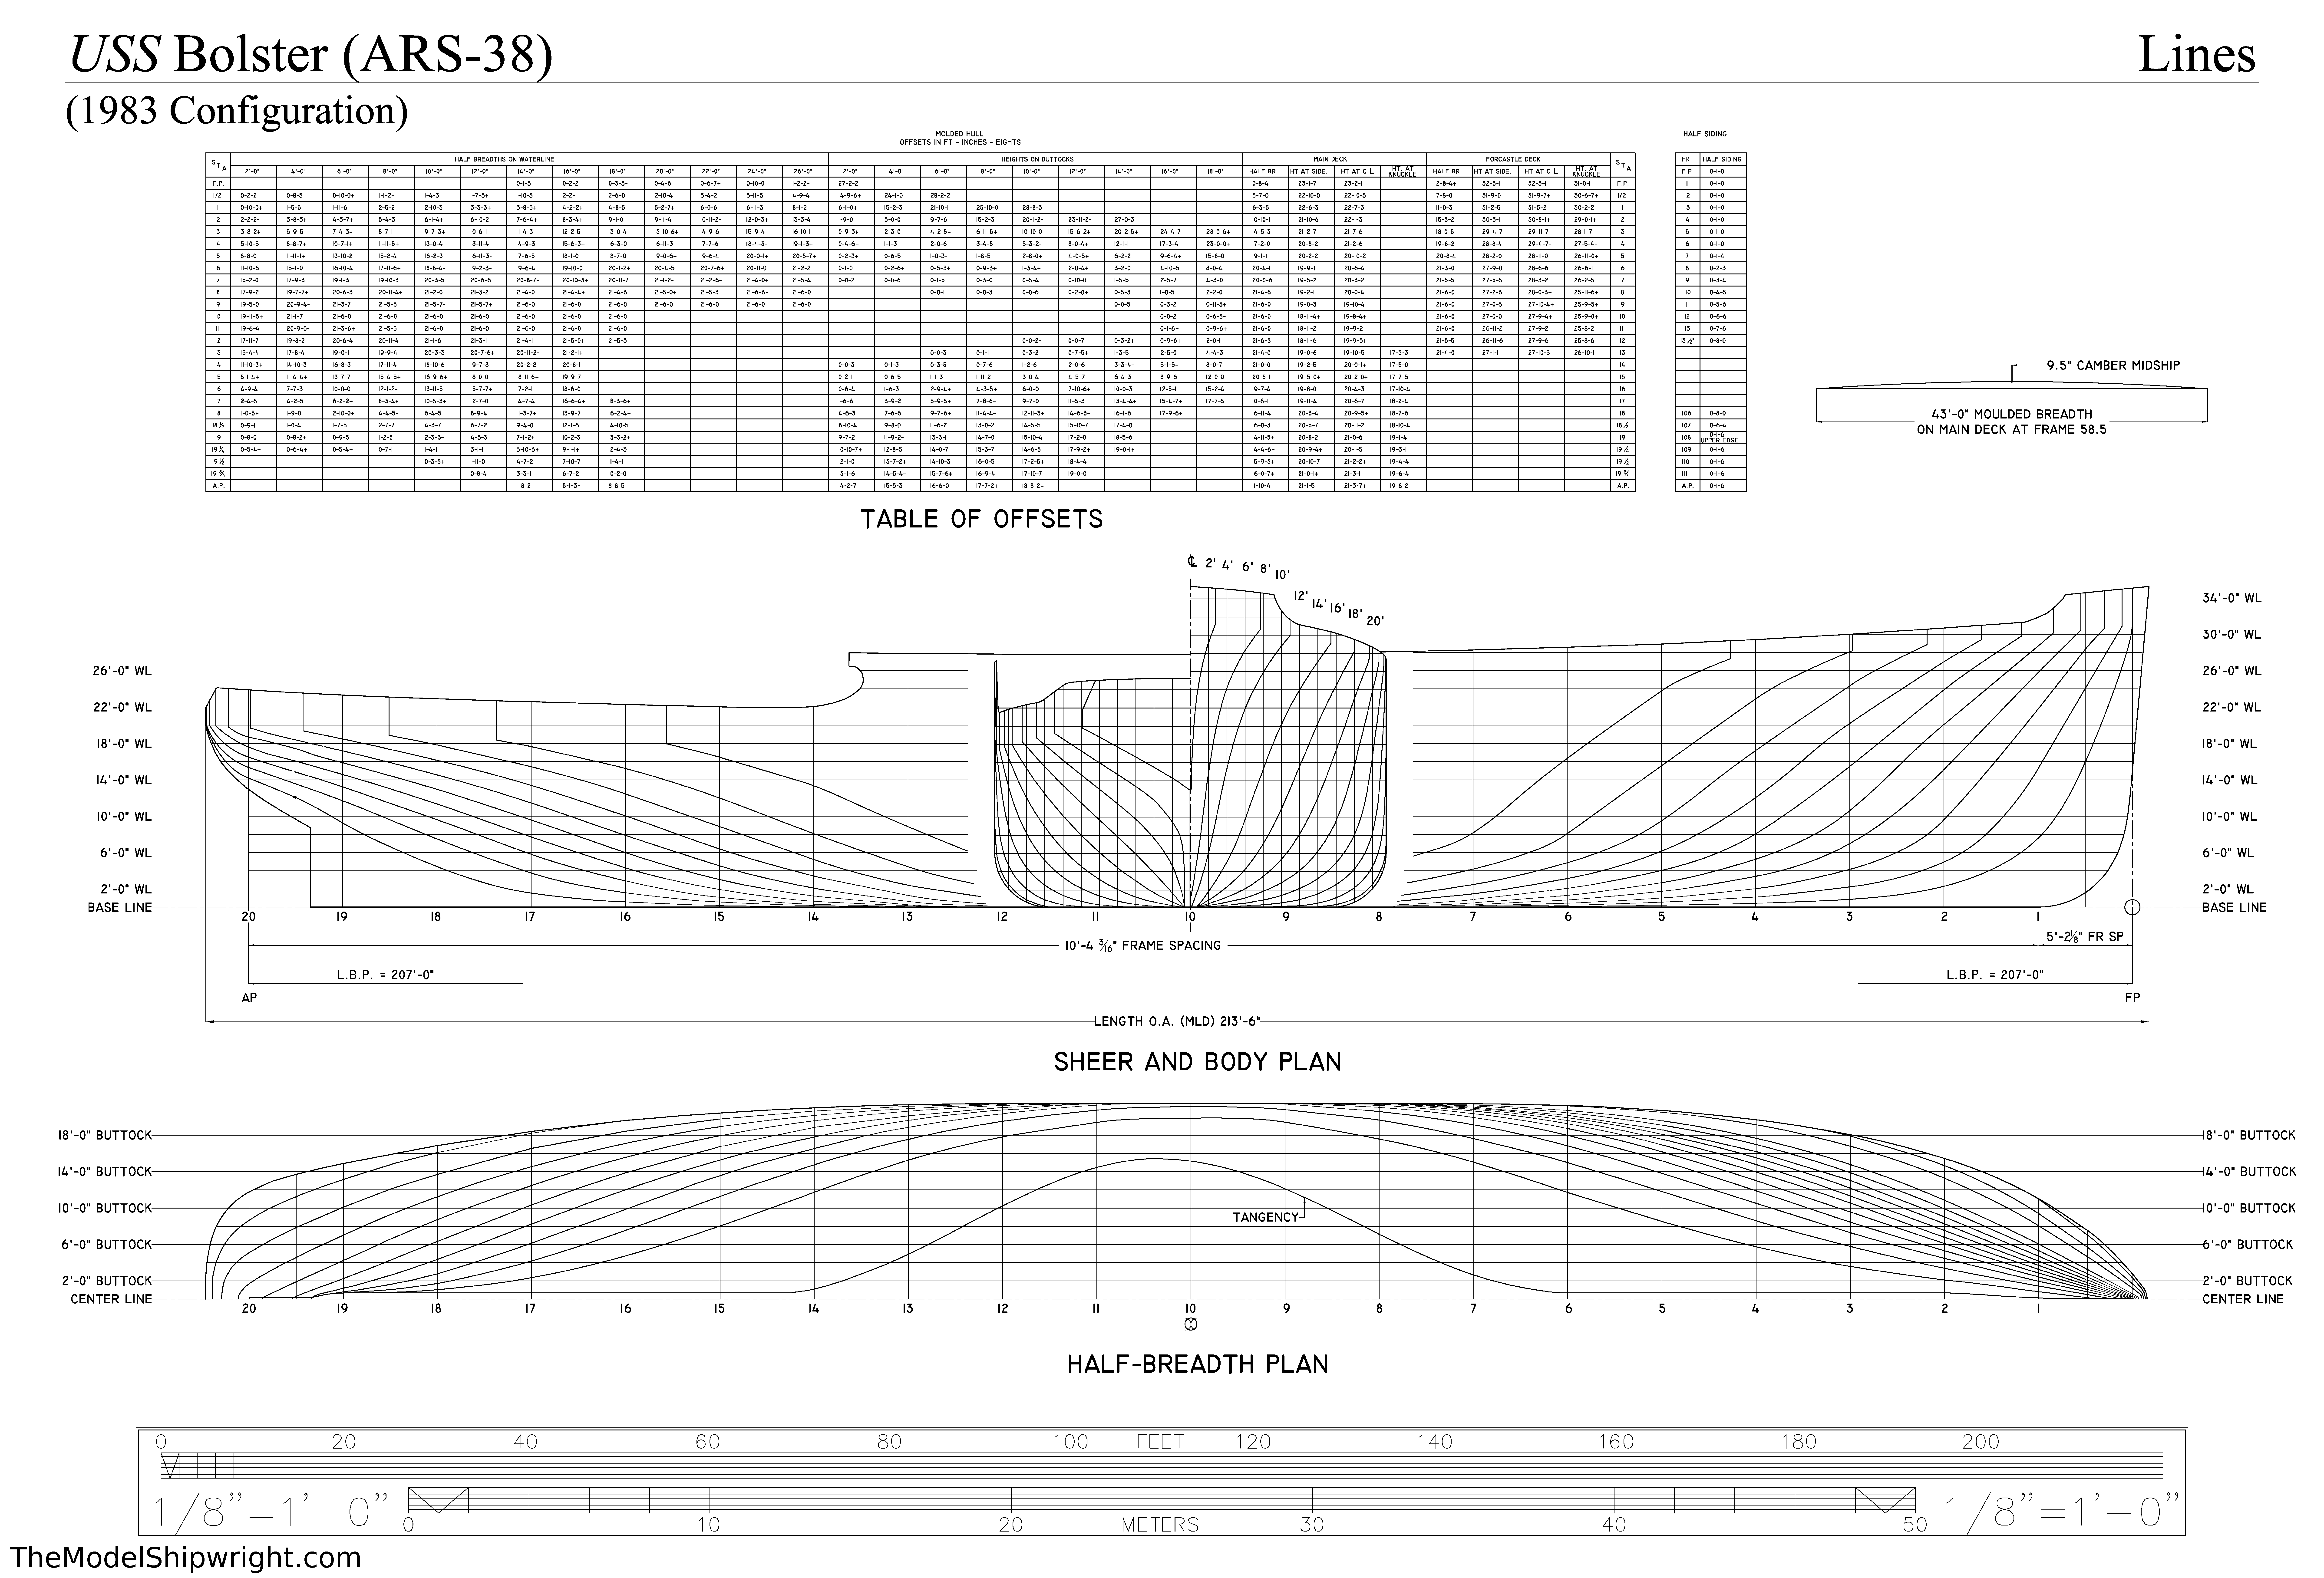 Lines plan. Table of Offsets корпуса судна. Пресидио модело чертежи. Breadth Moulded судна. Centerline of the ship.